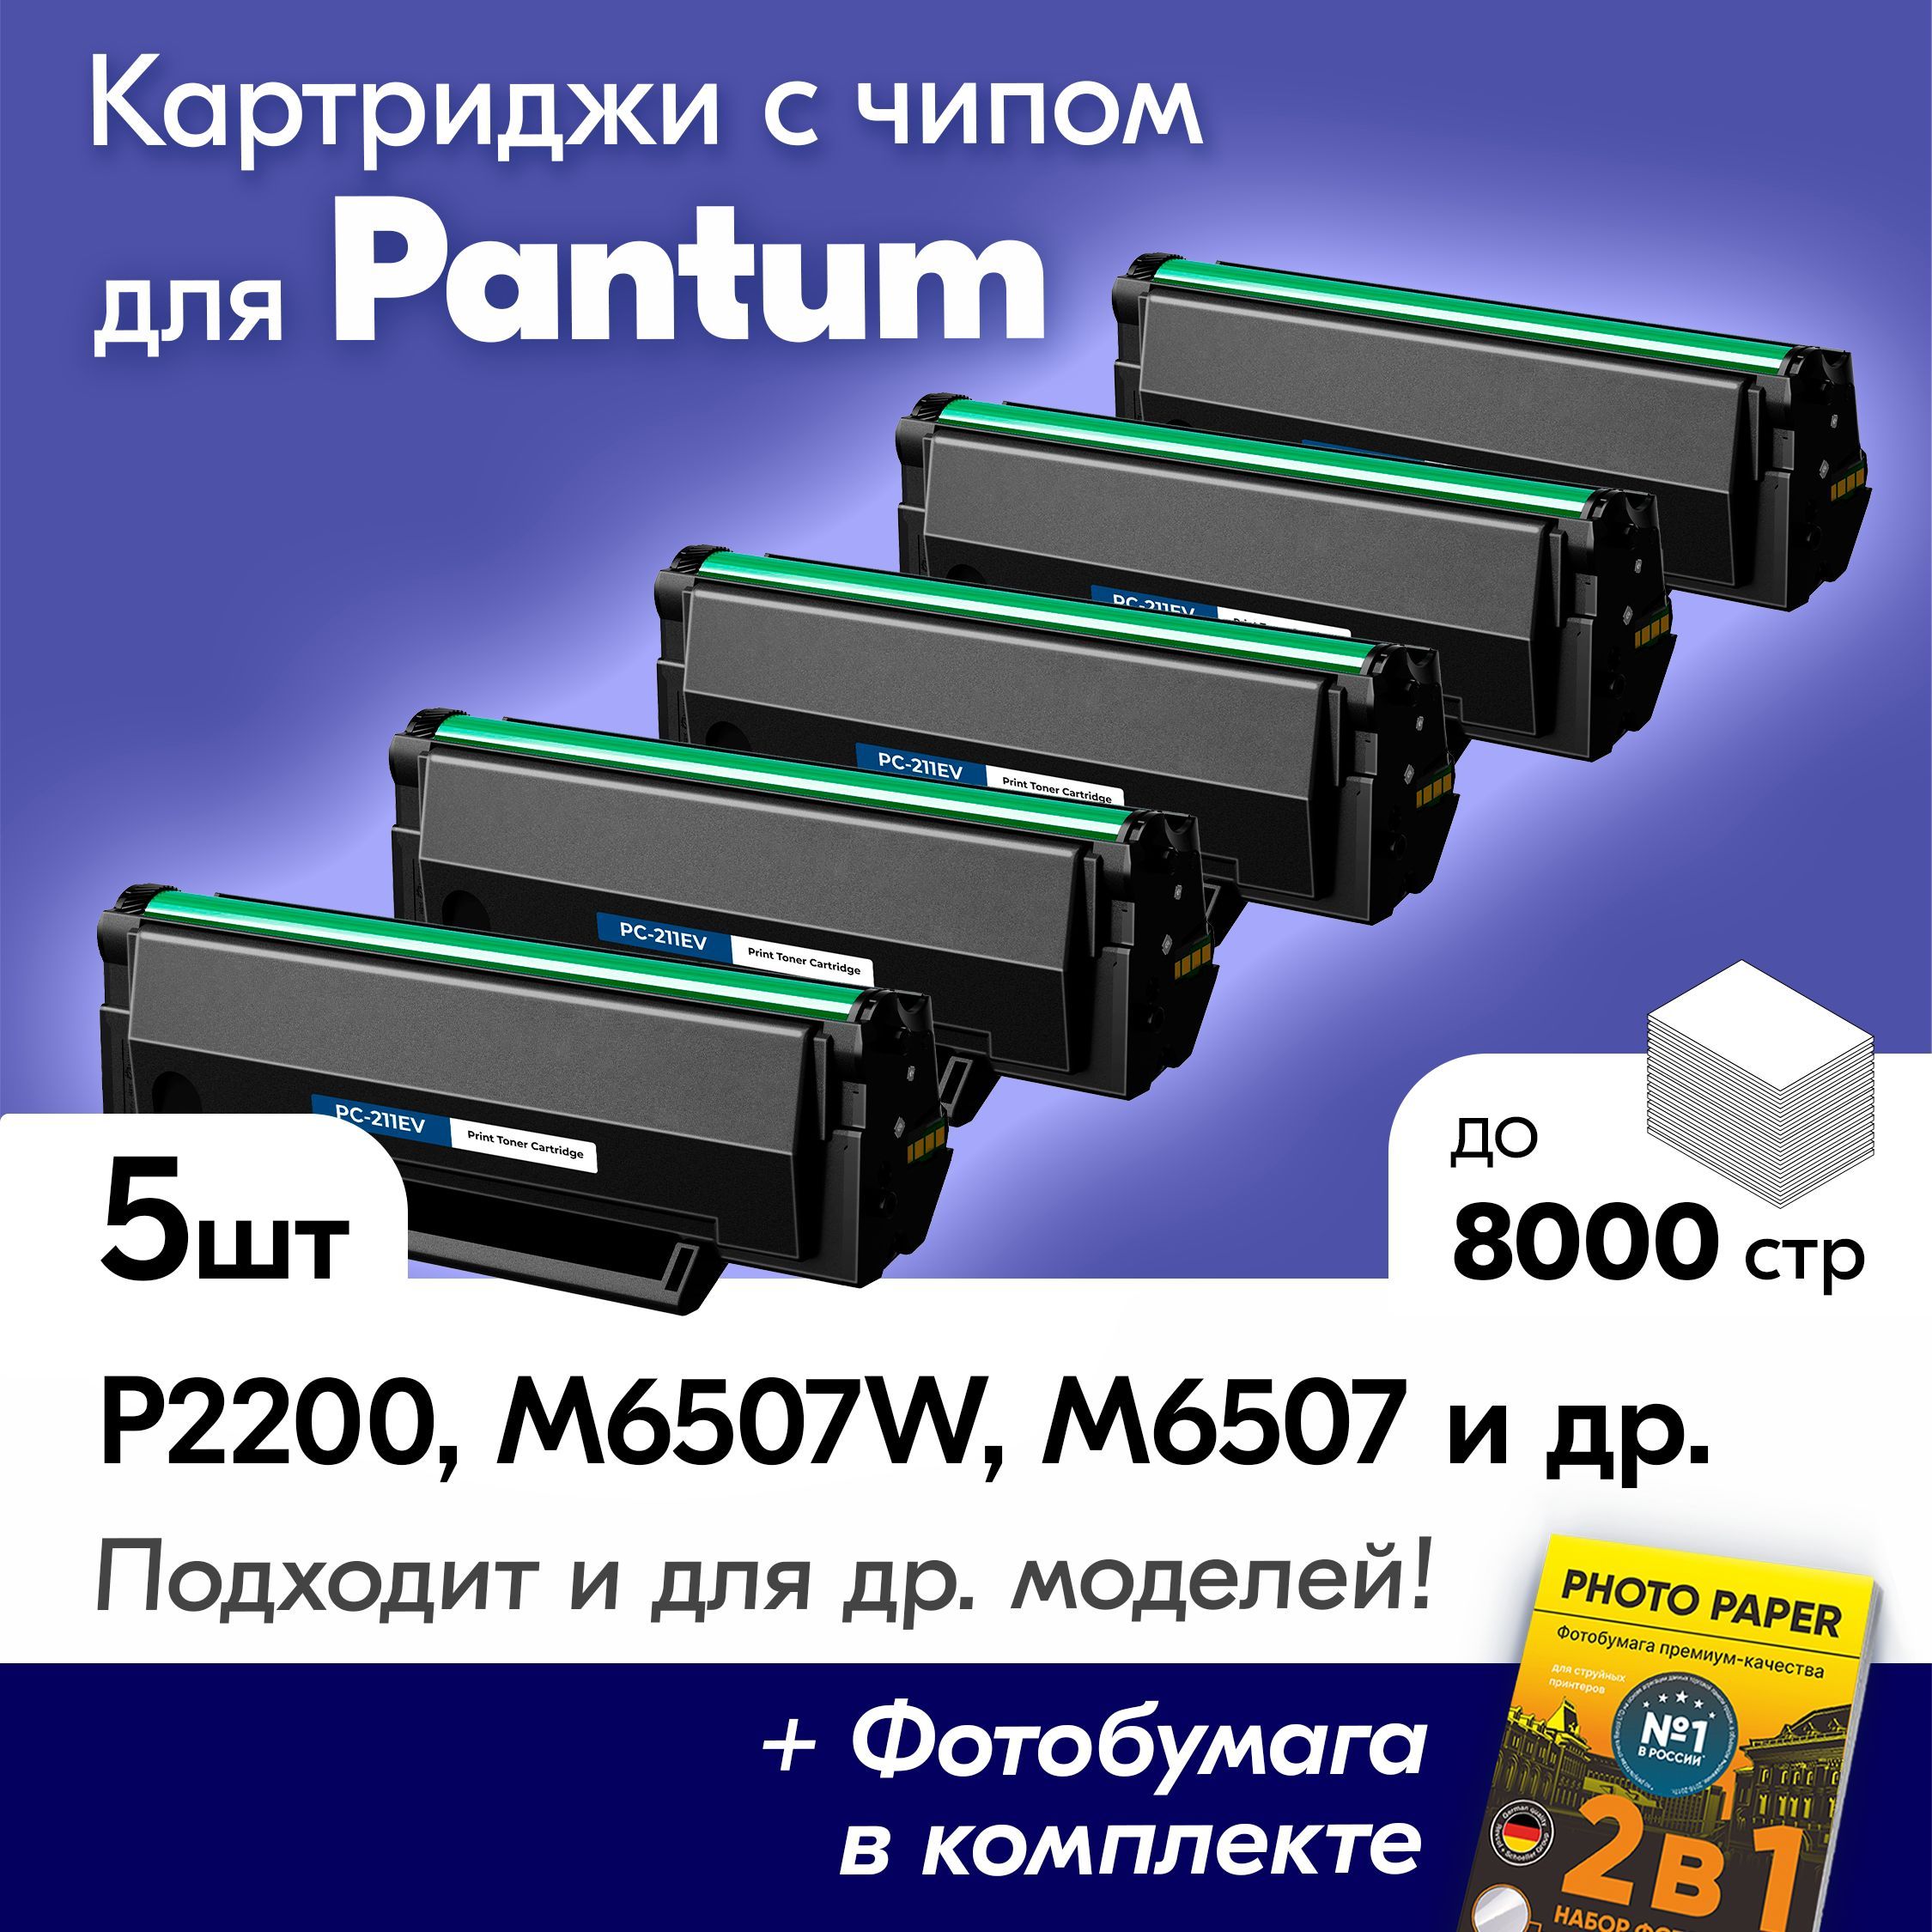 Pantum m6507w отзывы. Pabtum pc211prb. Принтер лазерный Pantum p2502. Принтер монохромный Pantum p2207. Pantum 6550nw застряла бумага.